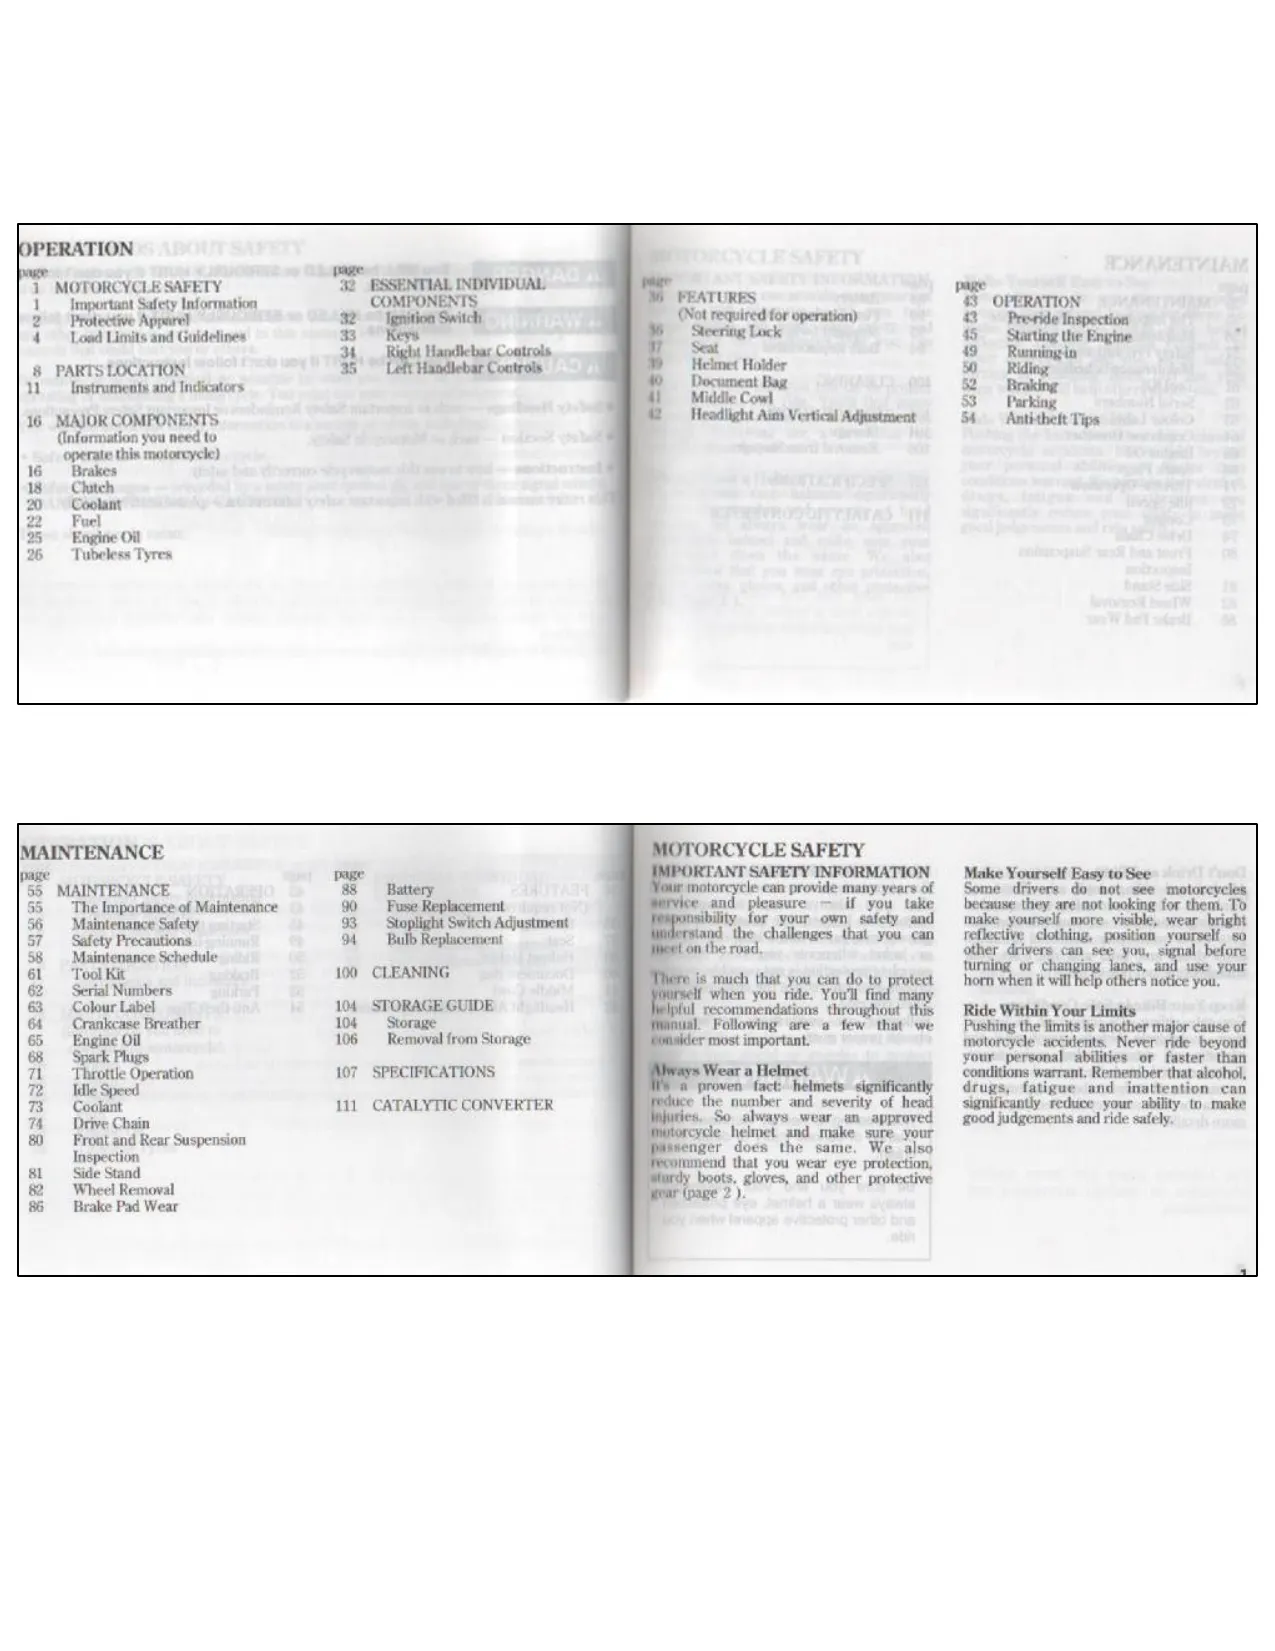 Honda CBR125R service manual Preview image 4